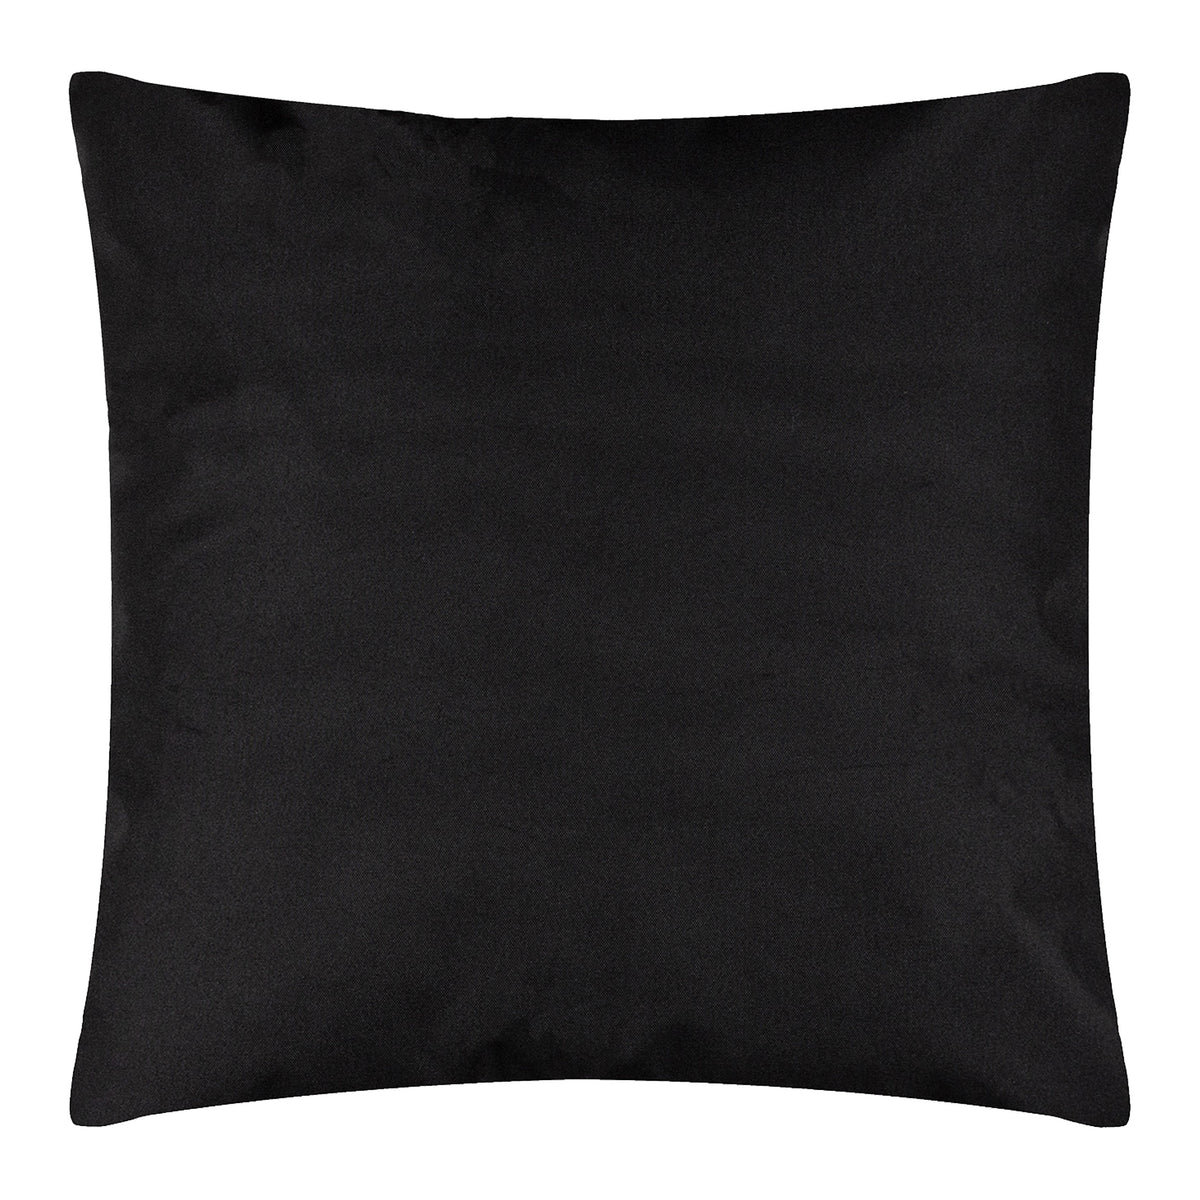 Wrap Plain Black 55X55 Outdoor Polyester Cushion Aqua 2 Pack